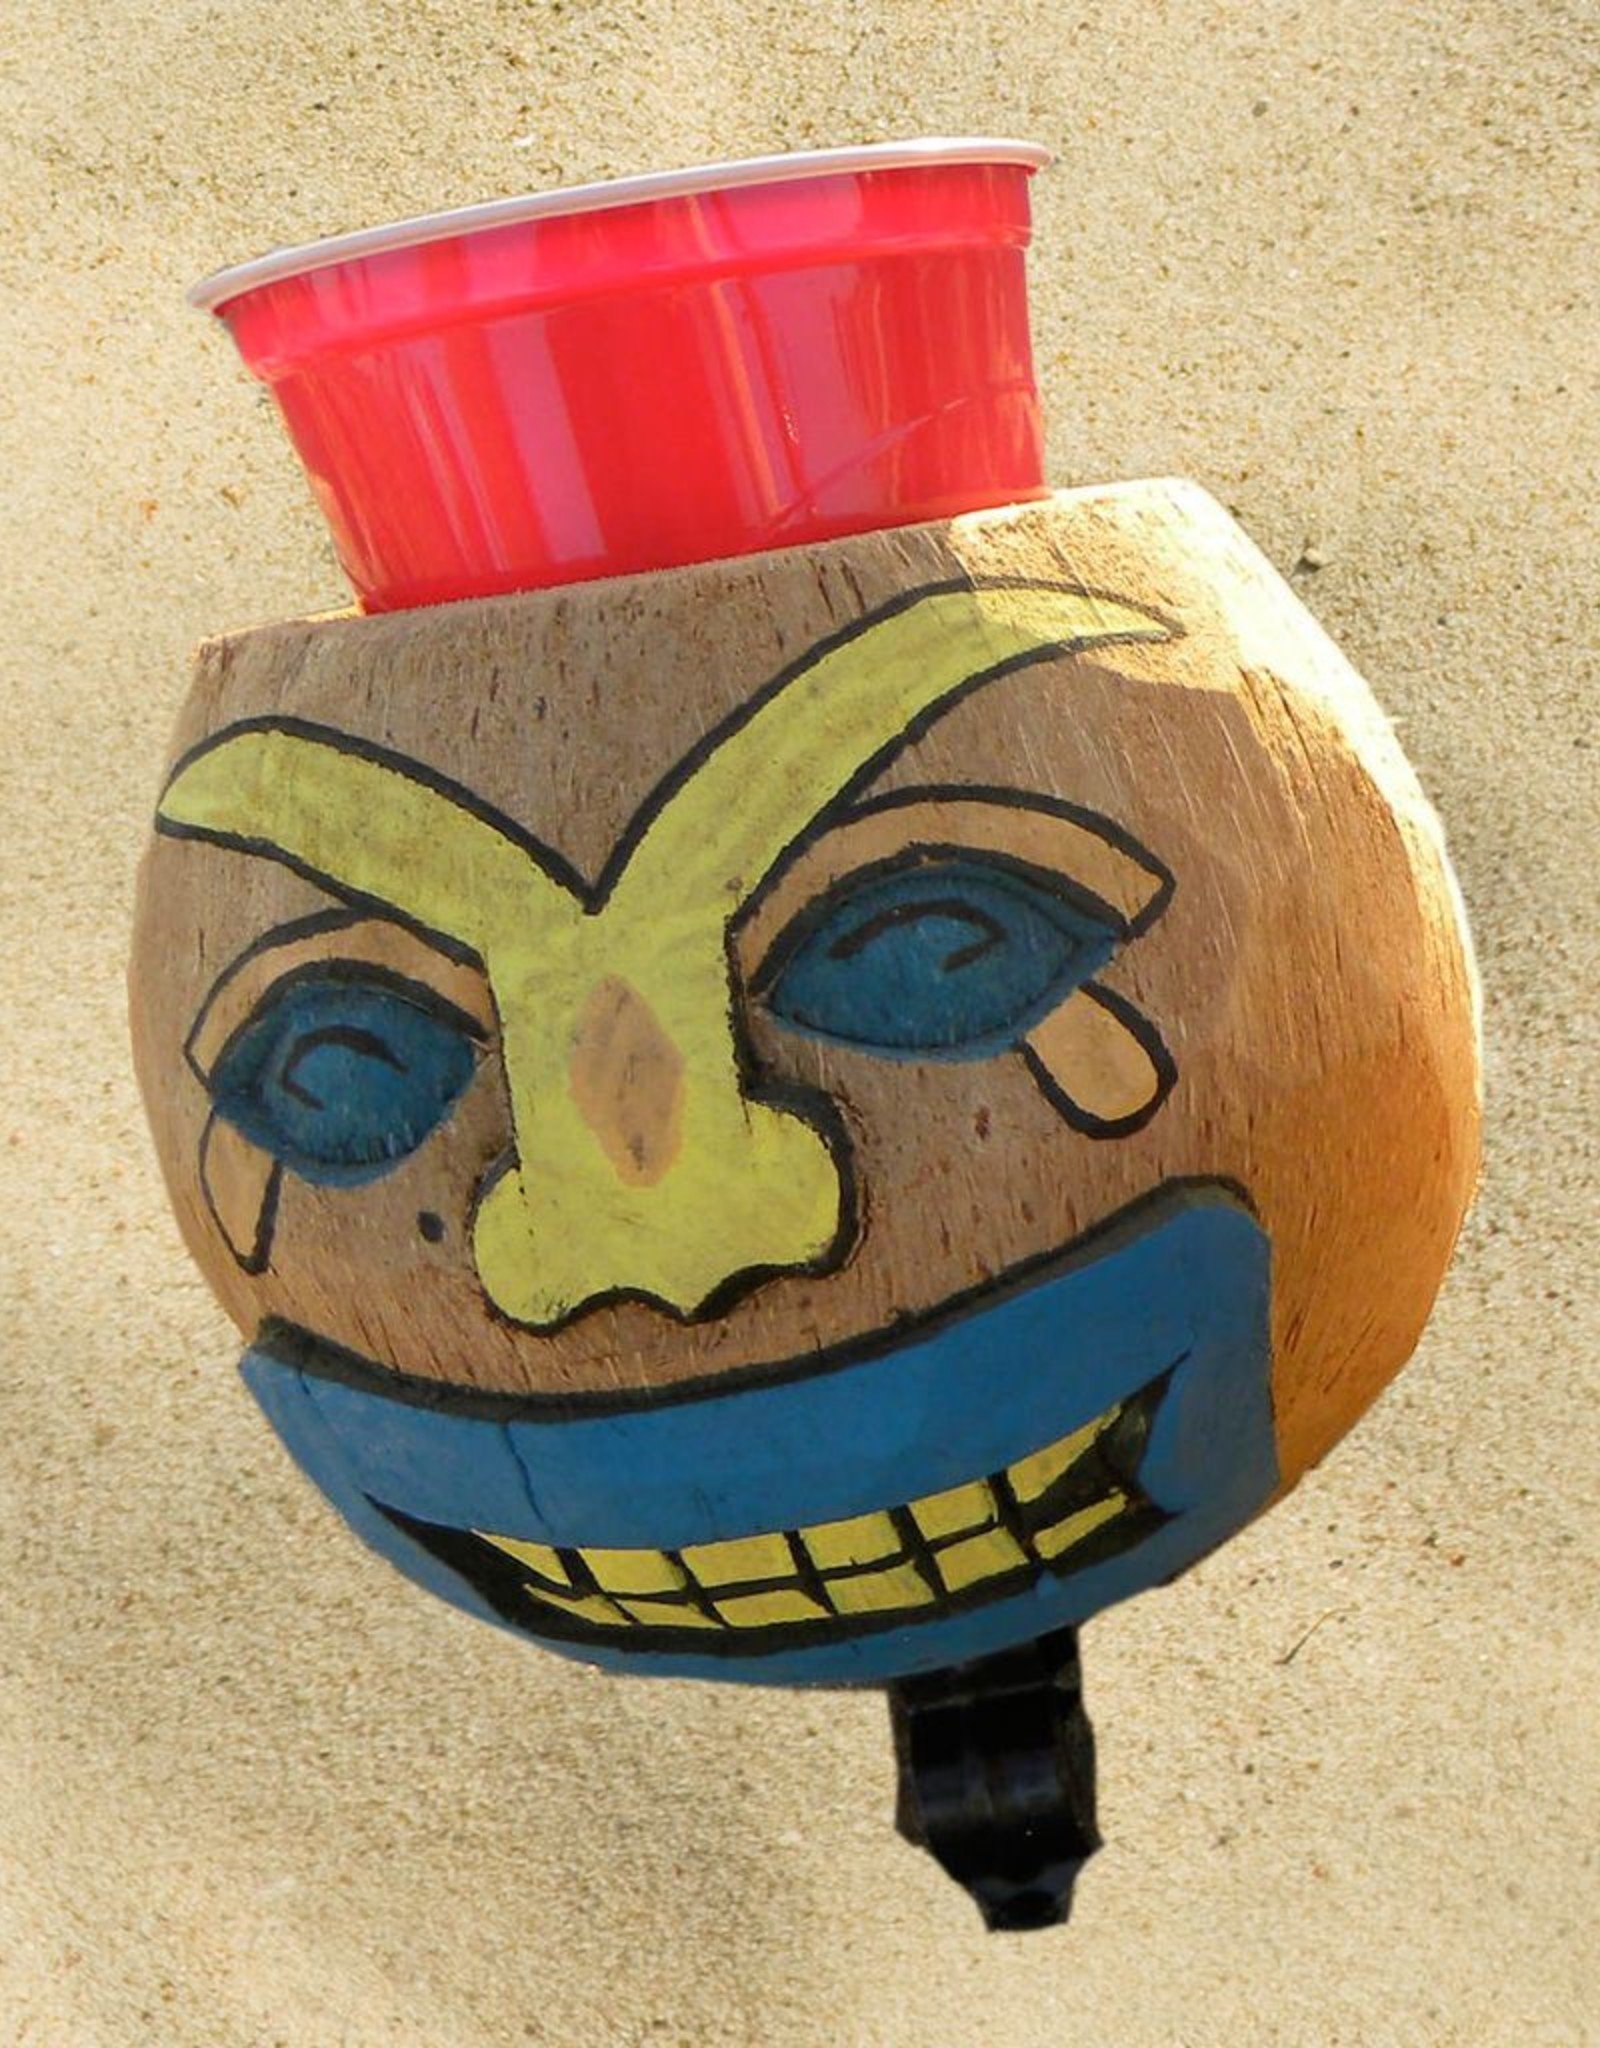 coconut bike cup holder